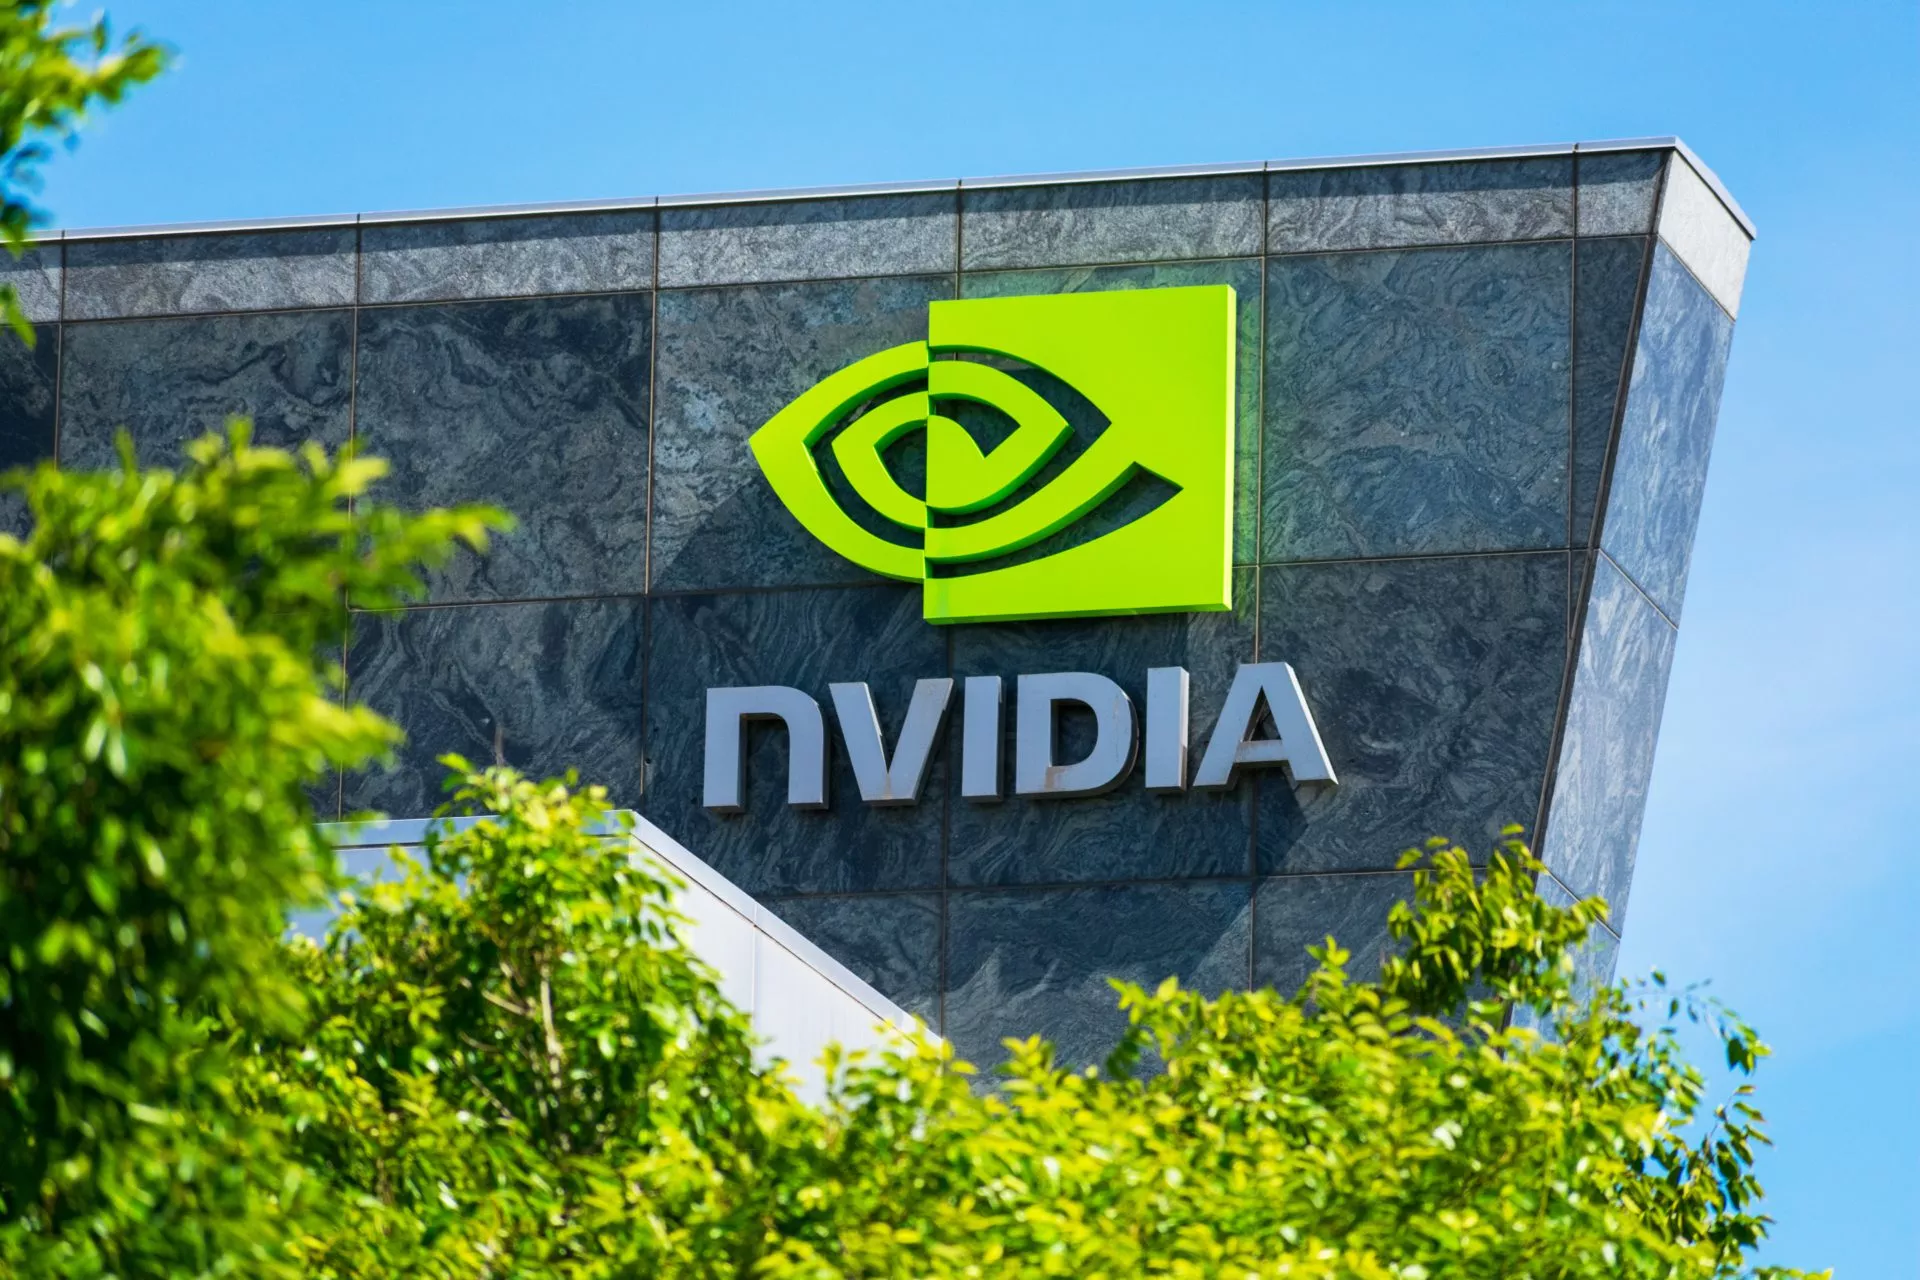 Nvidia’s Nieuwe supercomputerchips stimuleren de vooruitgang van AI